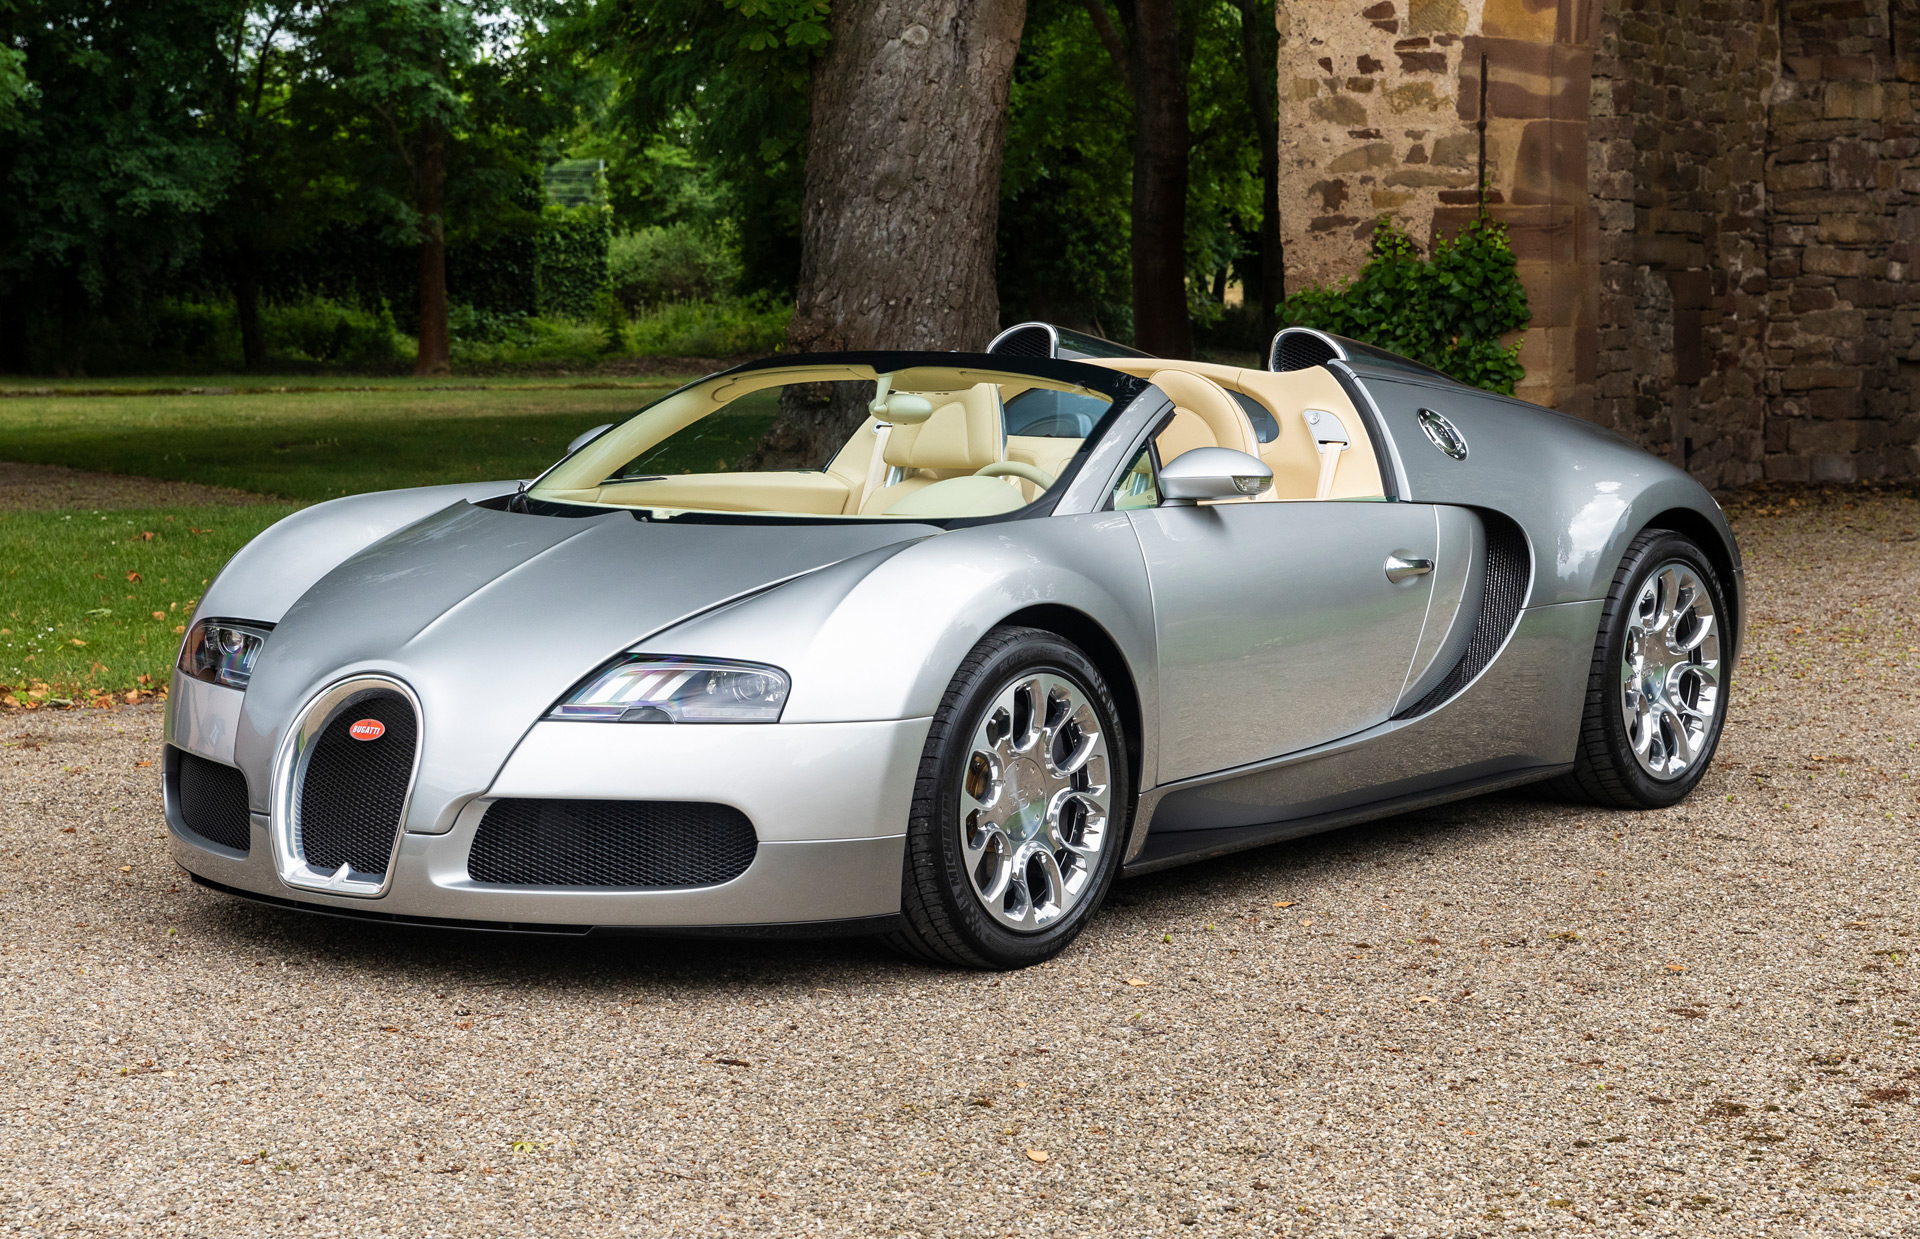 Bugatti Veyron that underwent La Maison Pur Sang restoration program